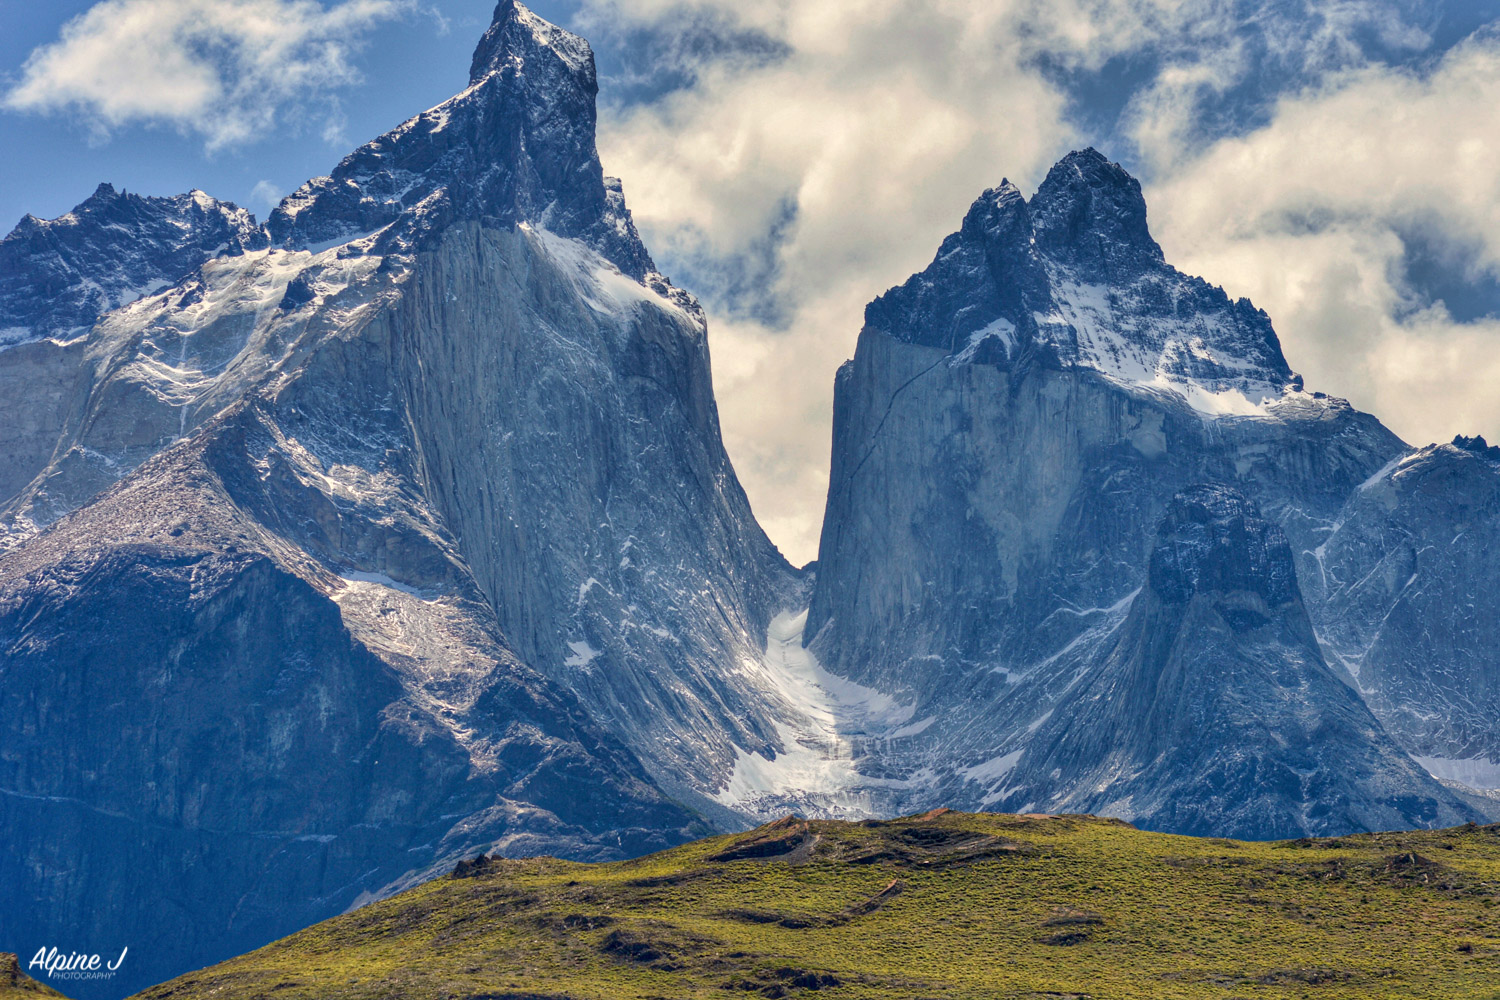 Los Cuernos in Torres Del Paine National Park in Chile.